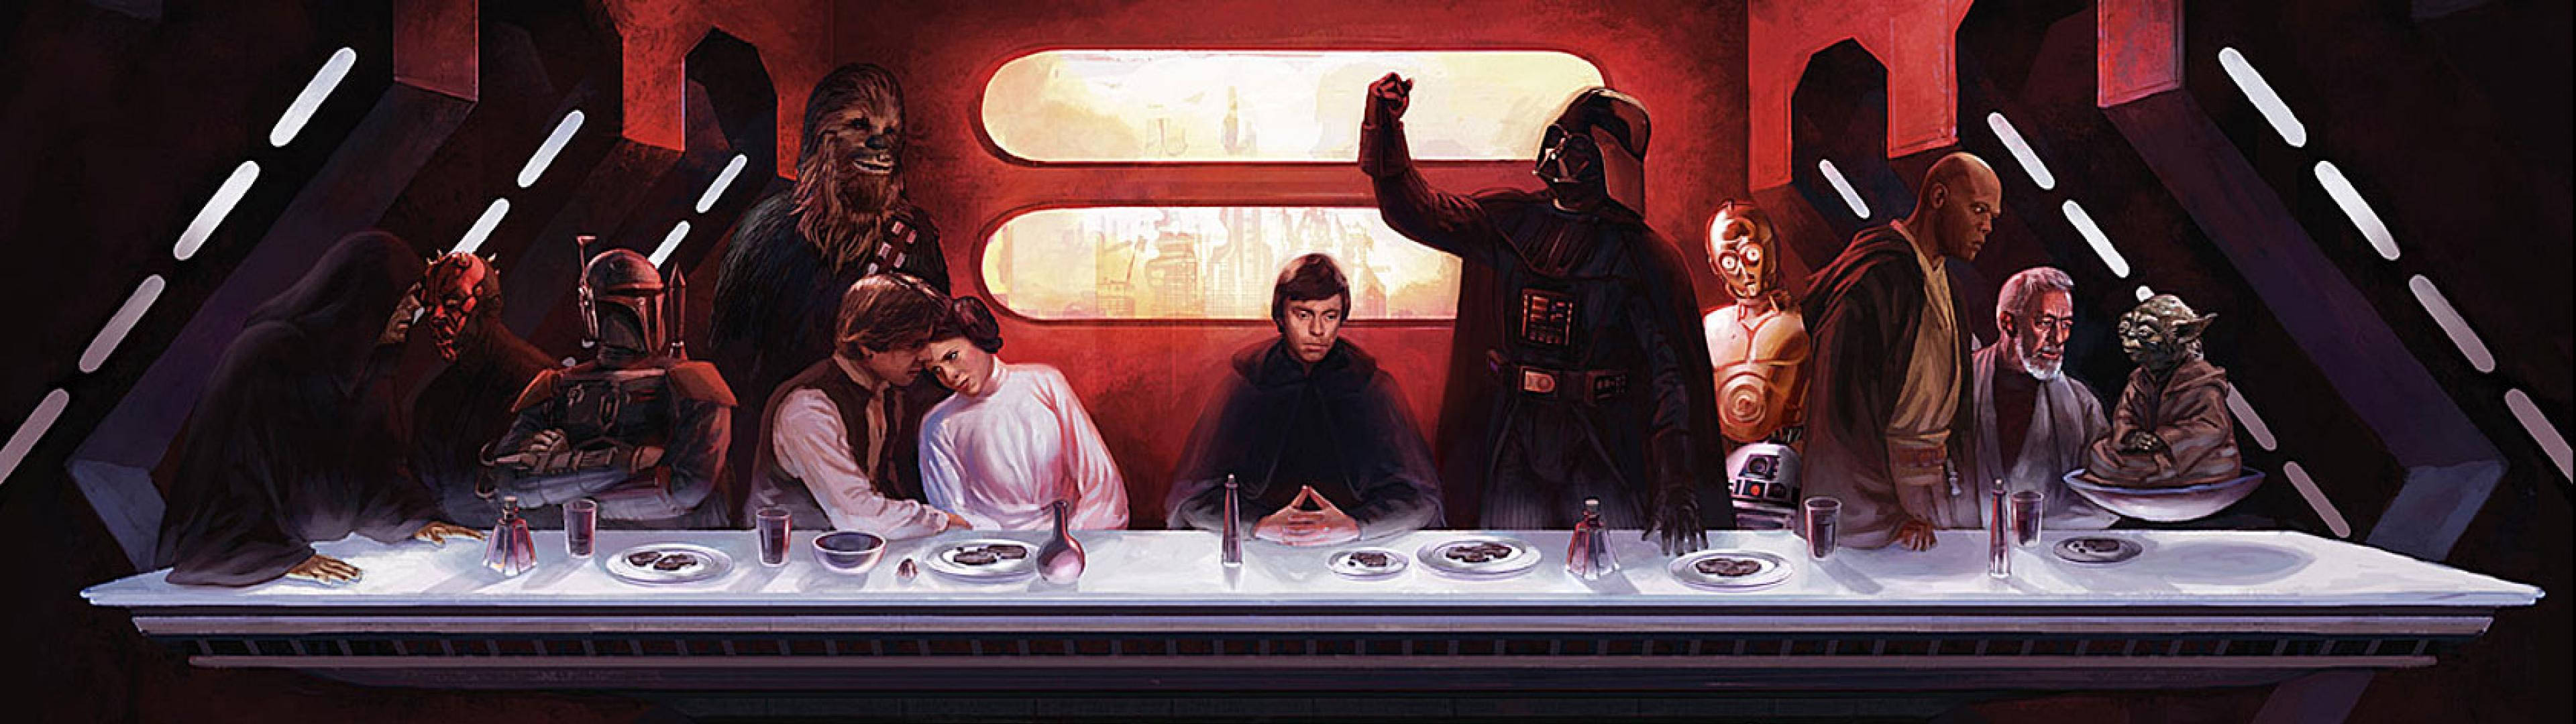 The Last Supper Star Wars Dual Screen Wallpaper